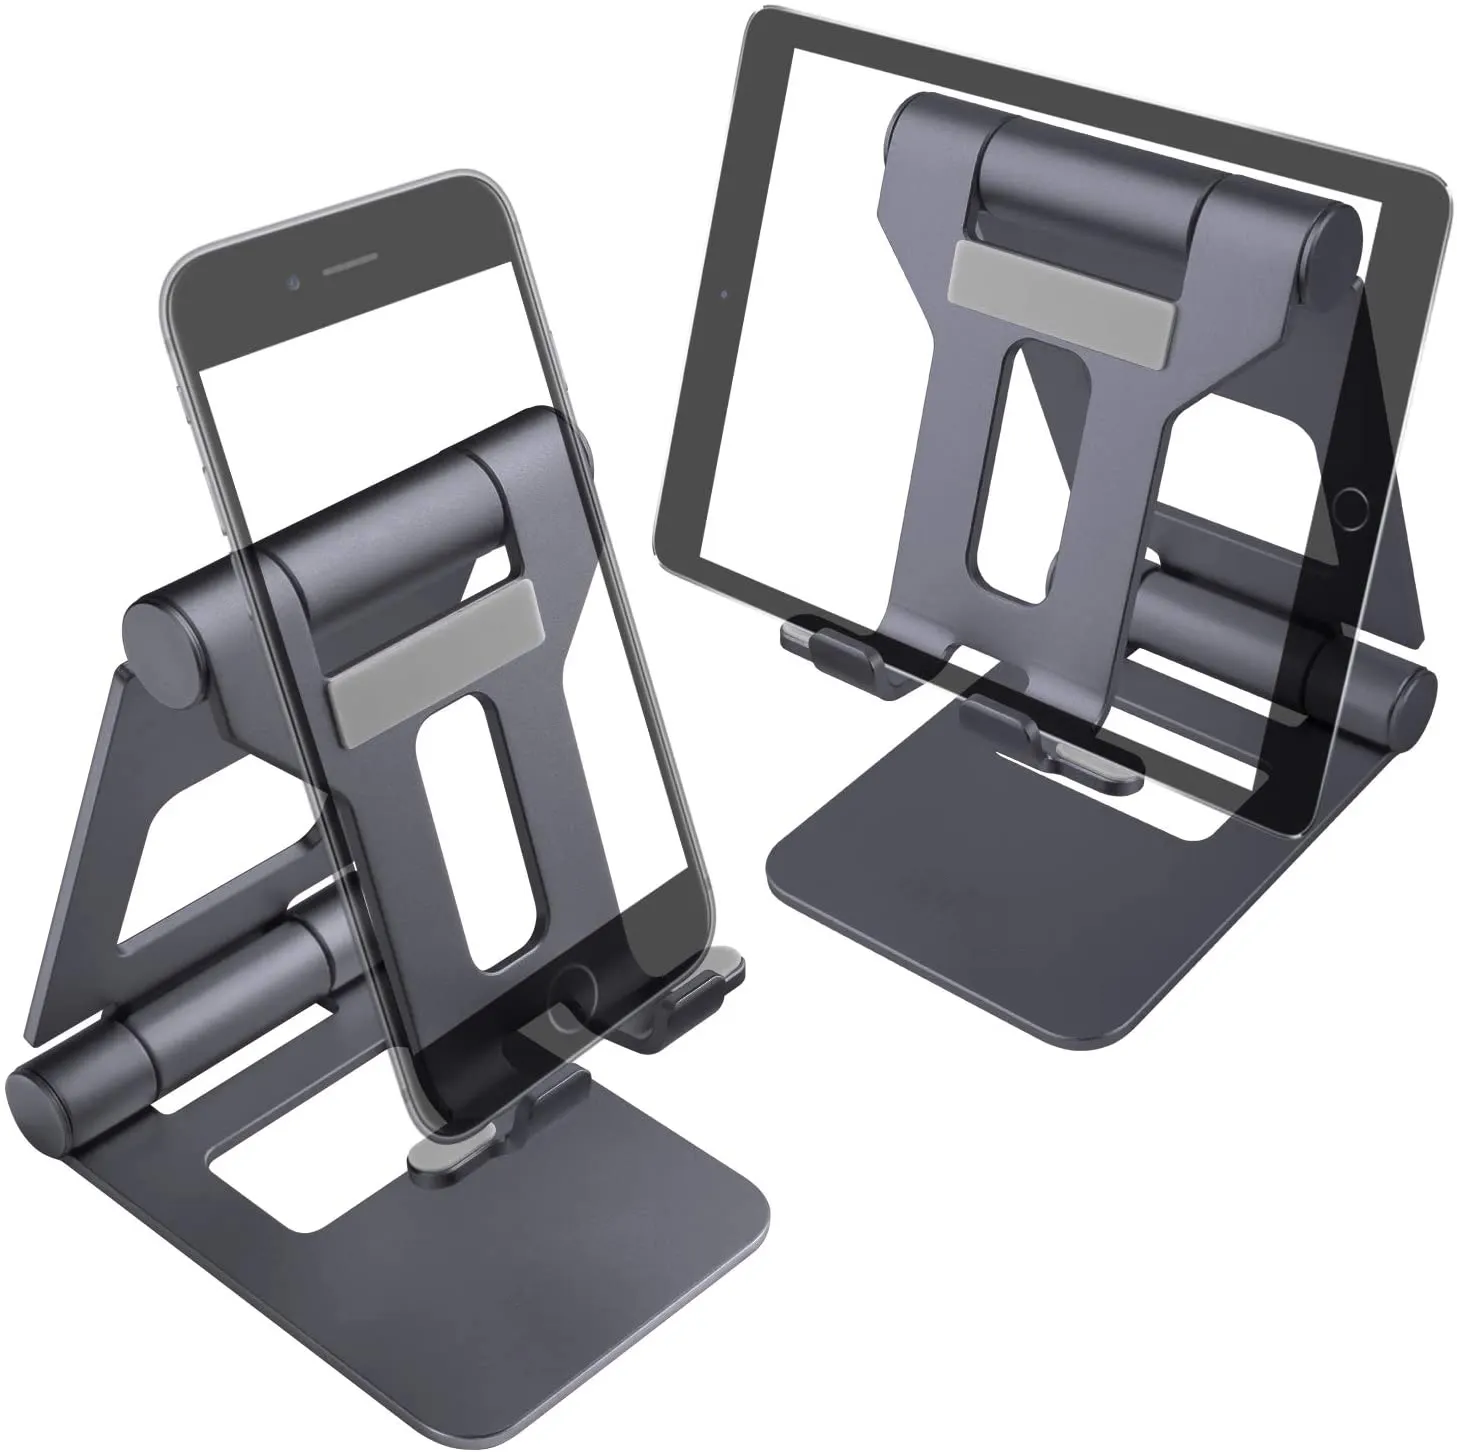 DeskStand Aluminium Adjustable Cell Phone Stand Mobile Holder Tablet Stand Desktop Phone Holder for iPad for apple device